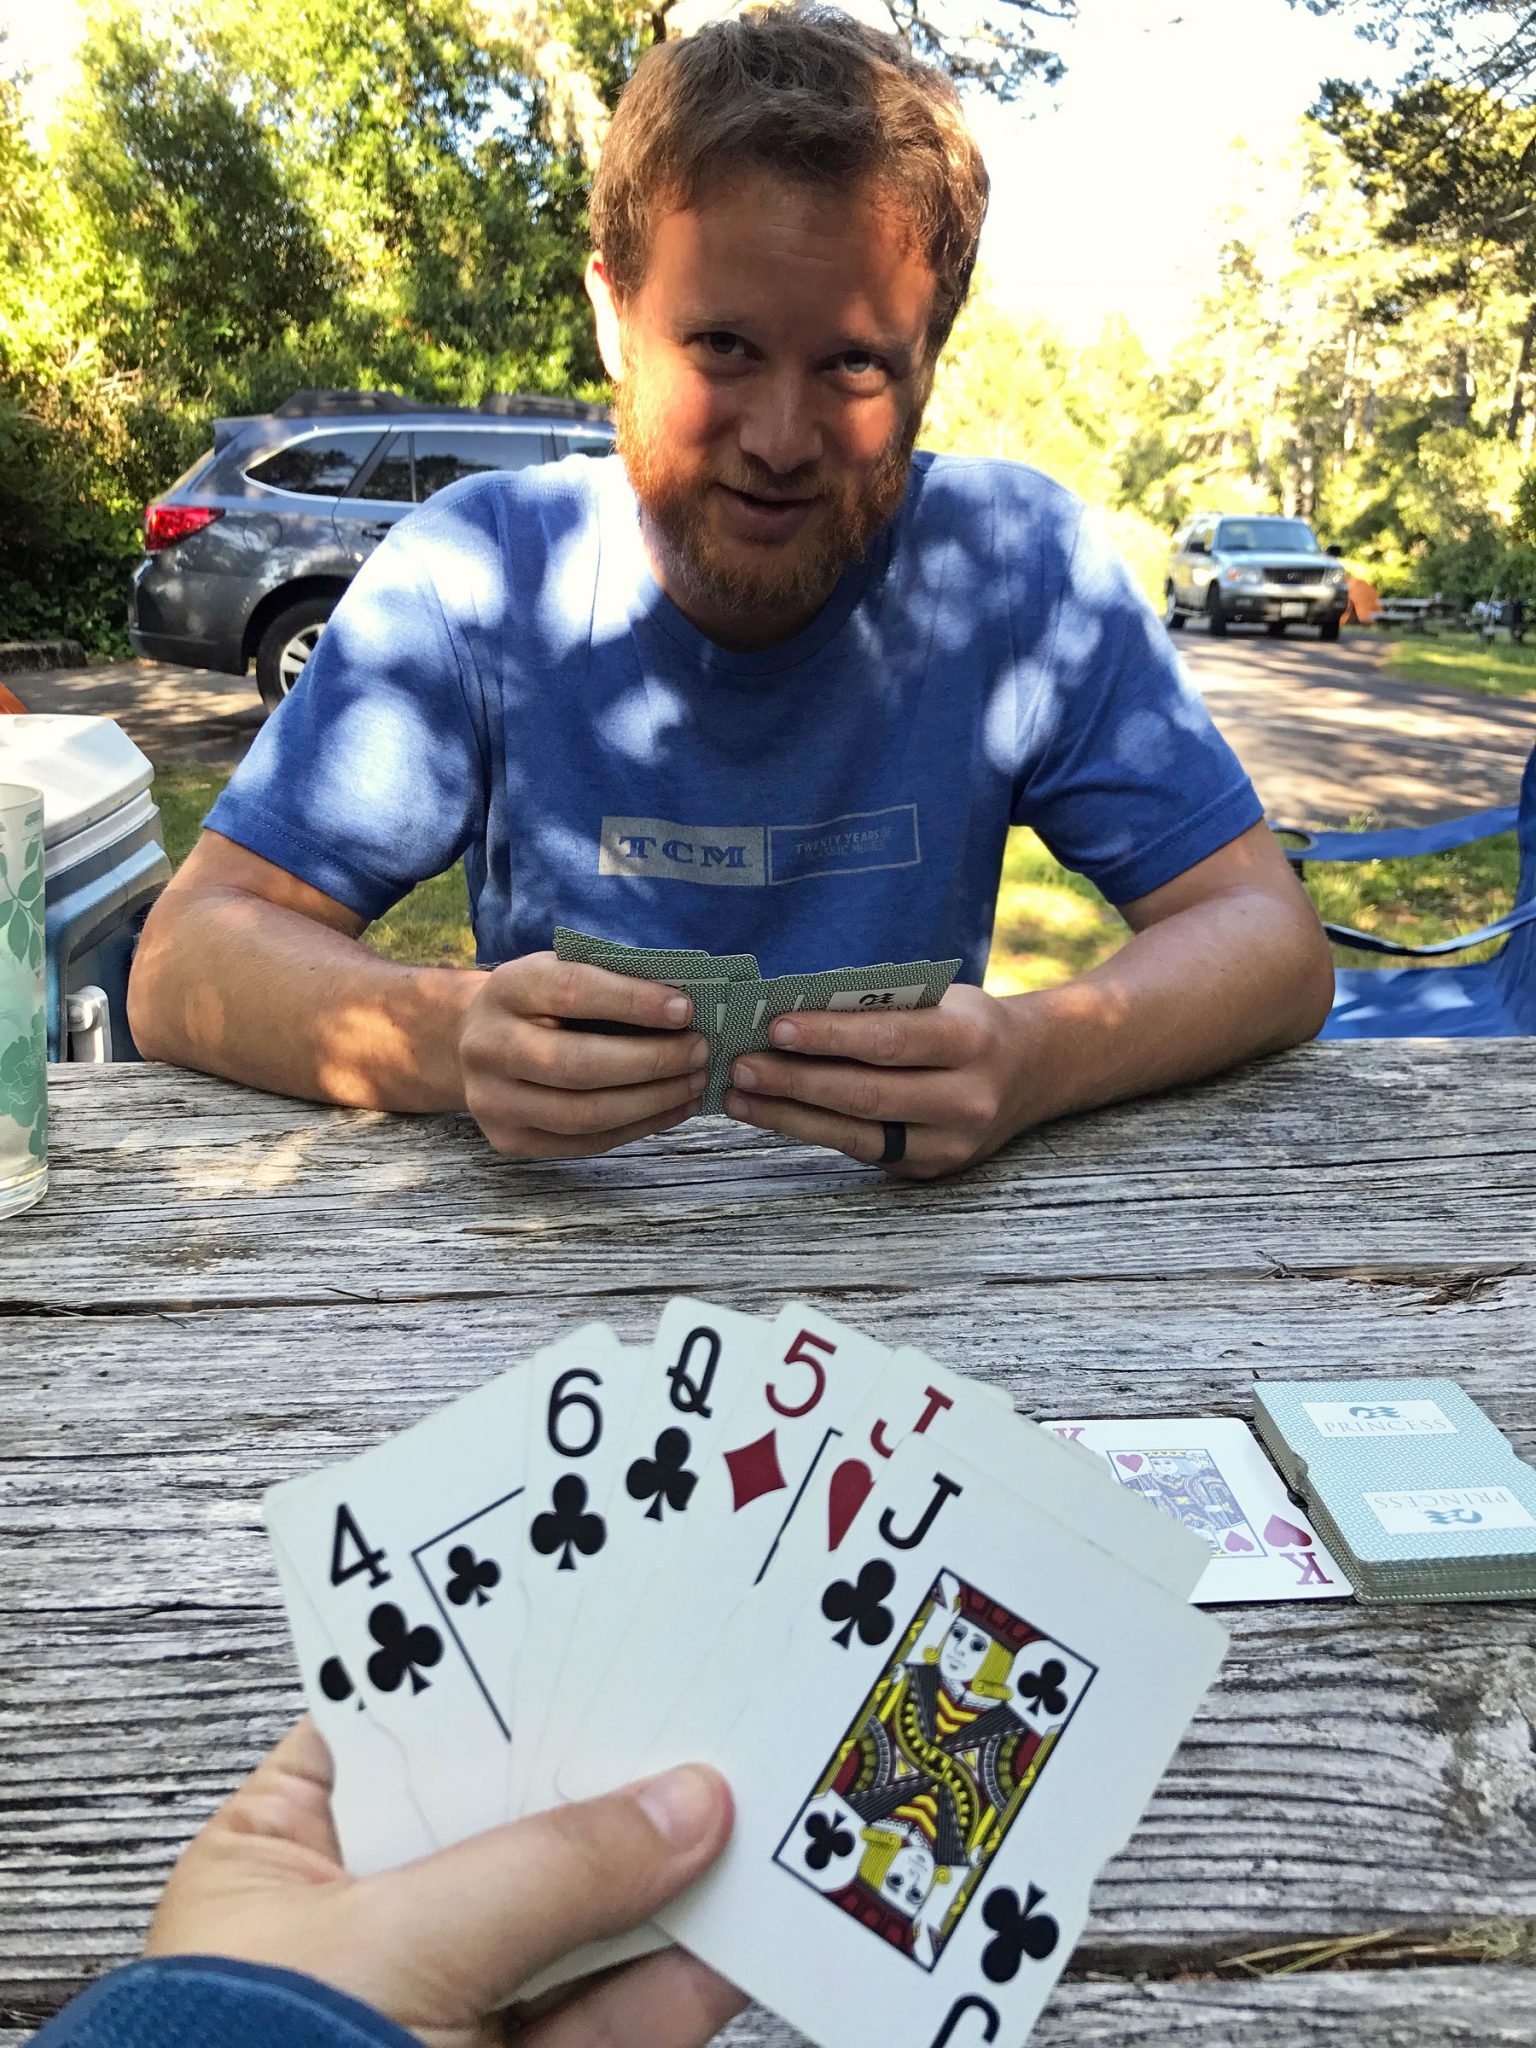 jeremy-loretta-playing-cards-camping.jpg